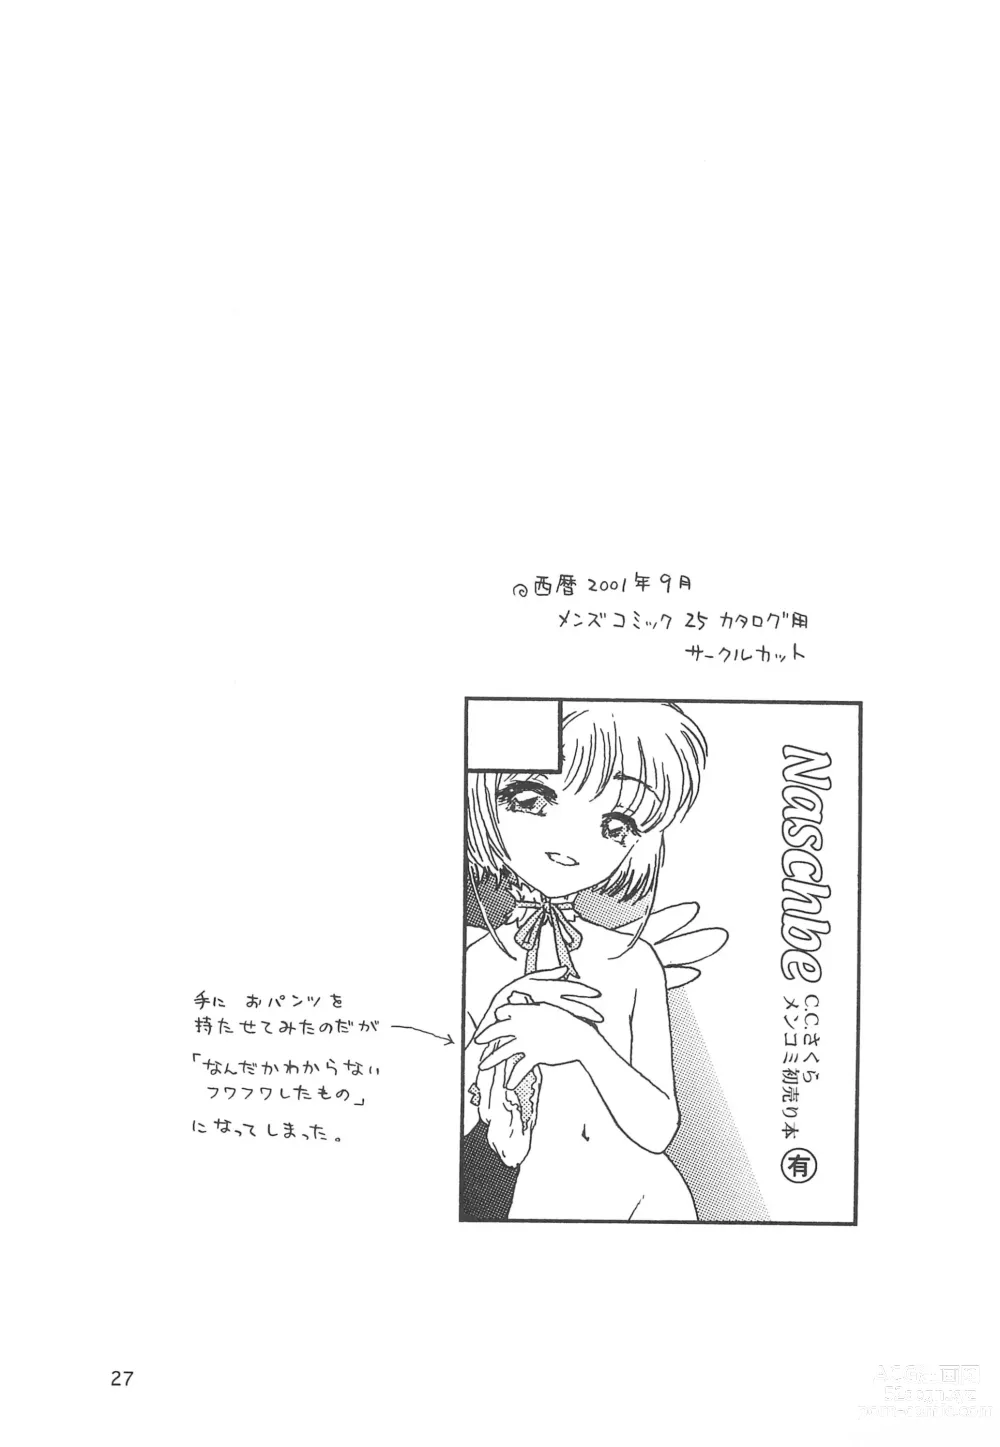 Page 27 of doujinshi Rati-2